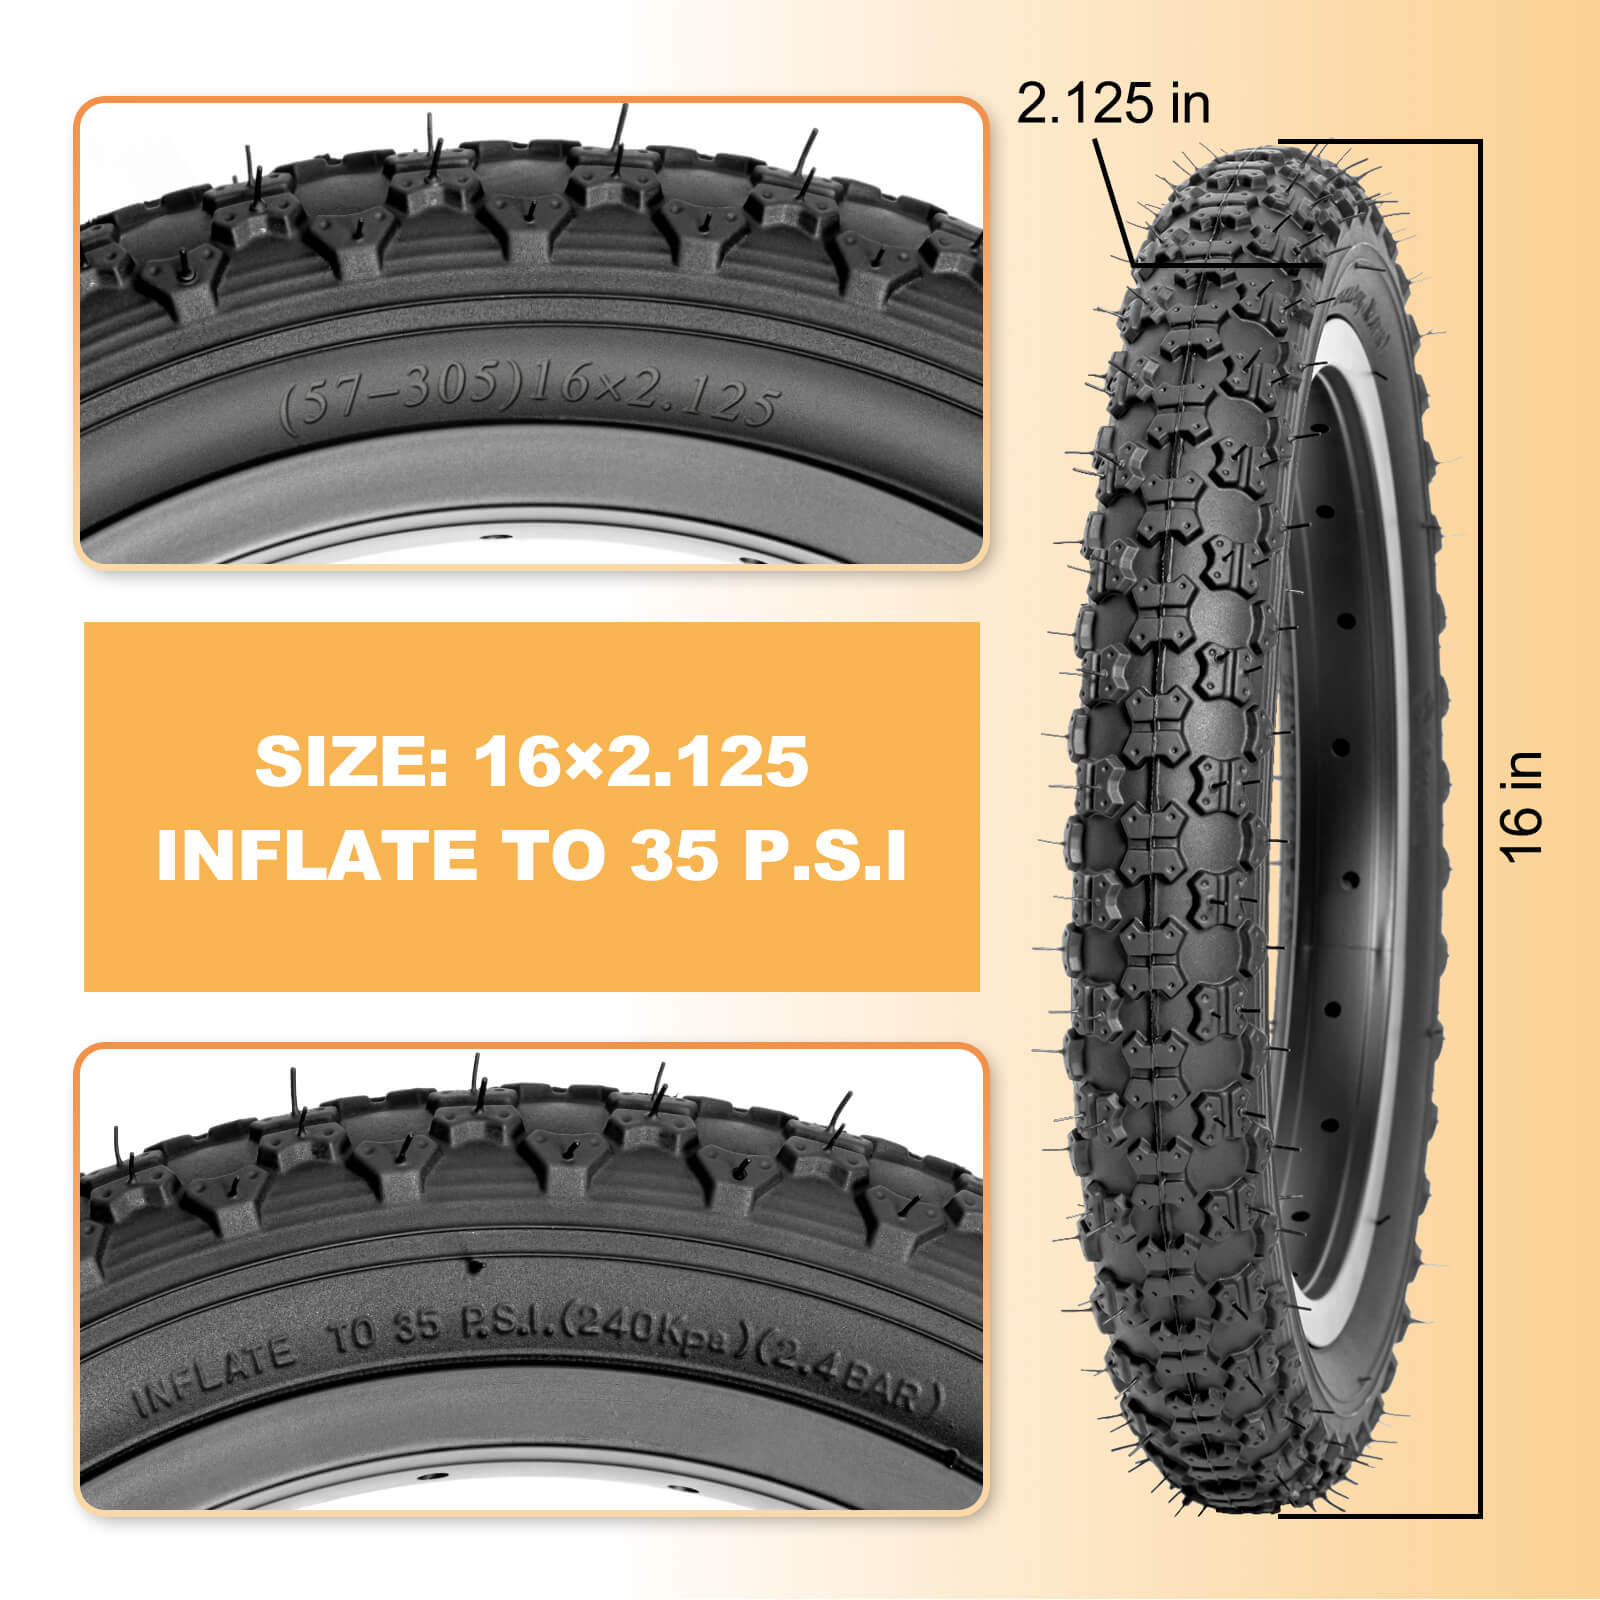 Hycline Bowlite 16"×2.125 Childs Bike Tire